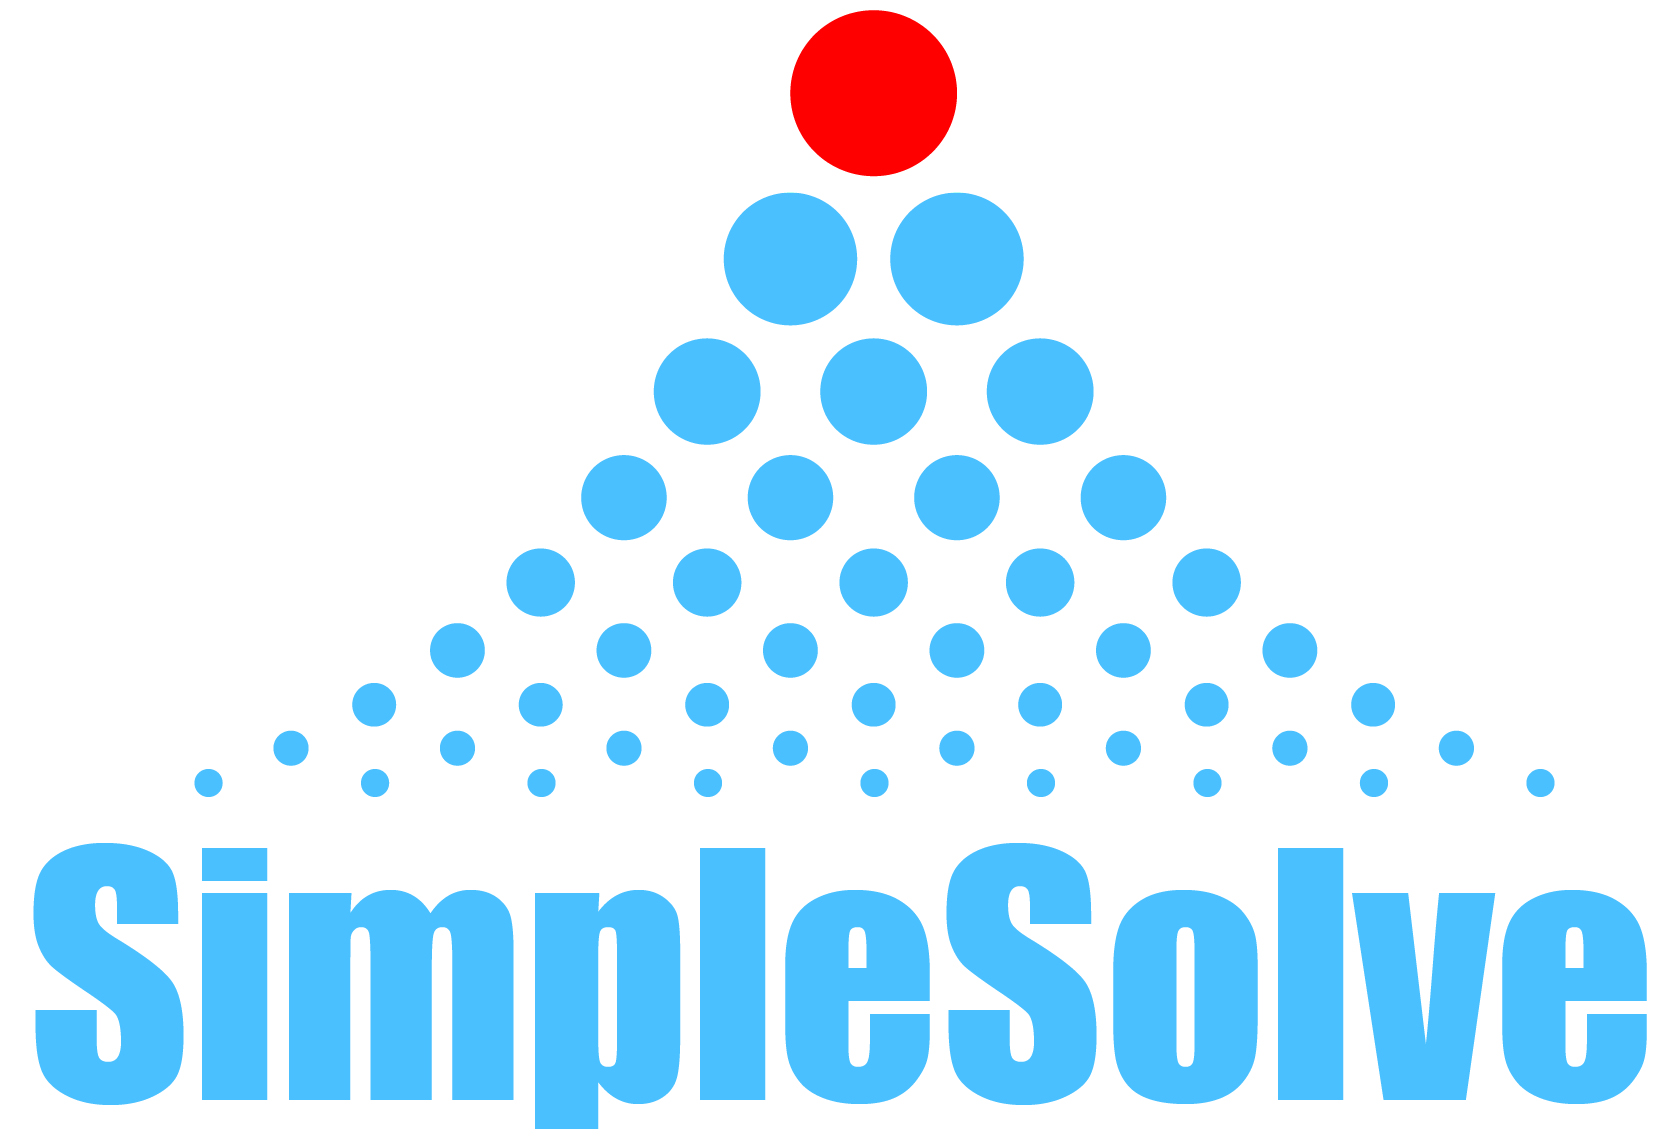 SimpleSolve Logo